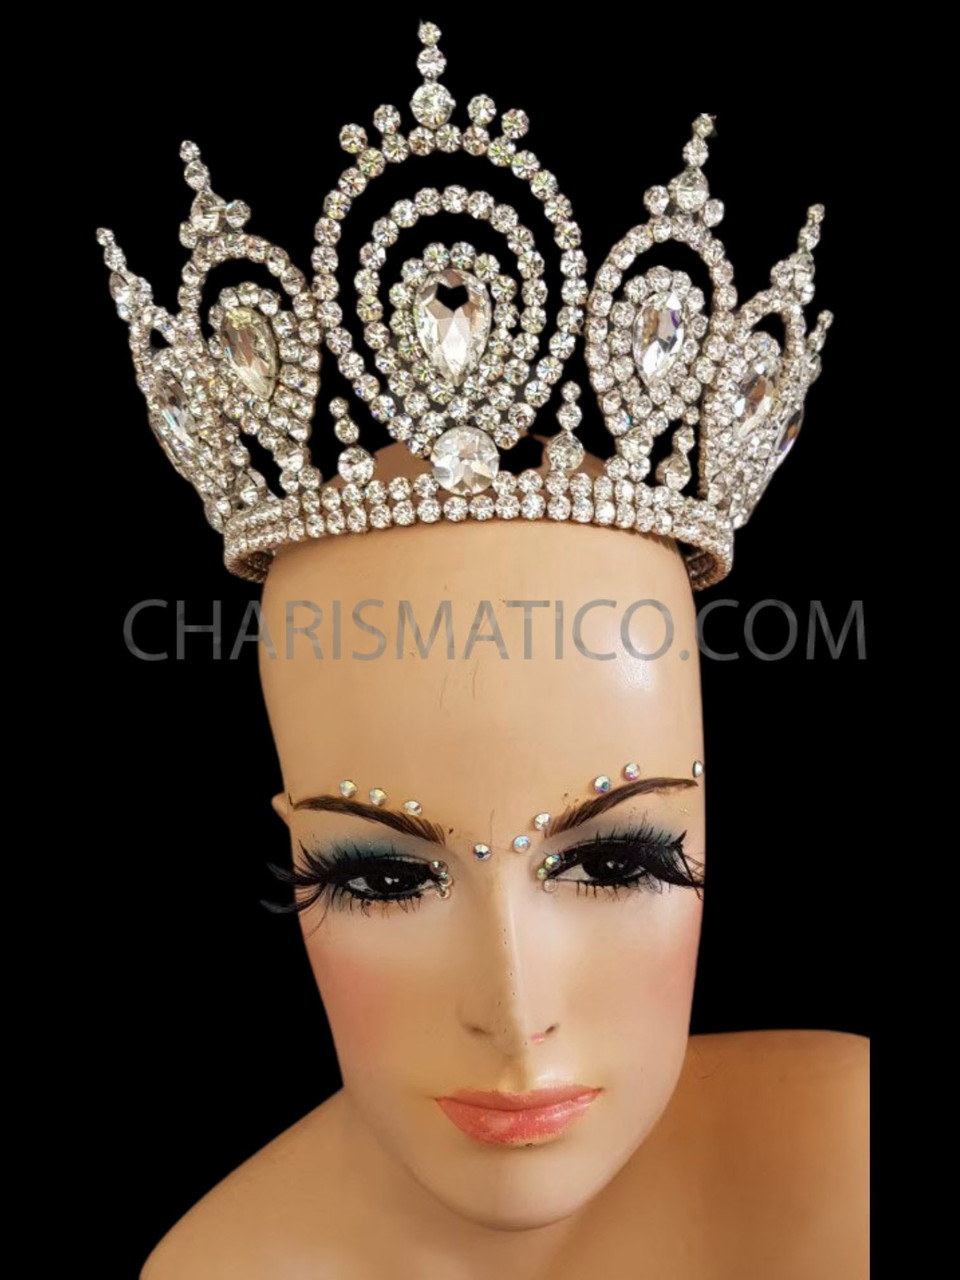 Diva S Classic Iridescent Rhinestone Adorned Shimmering Crystal Tiara Crown Headdress